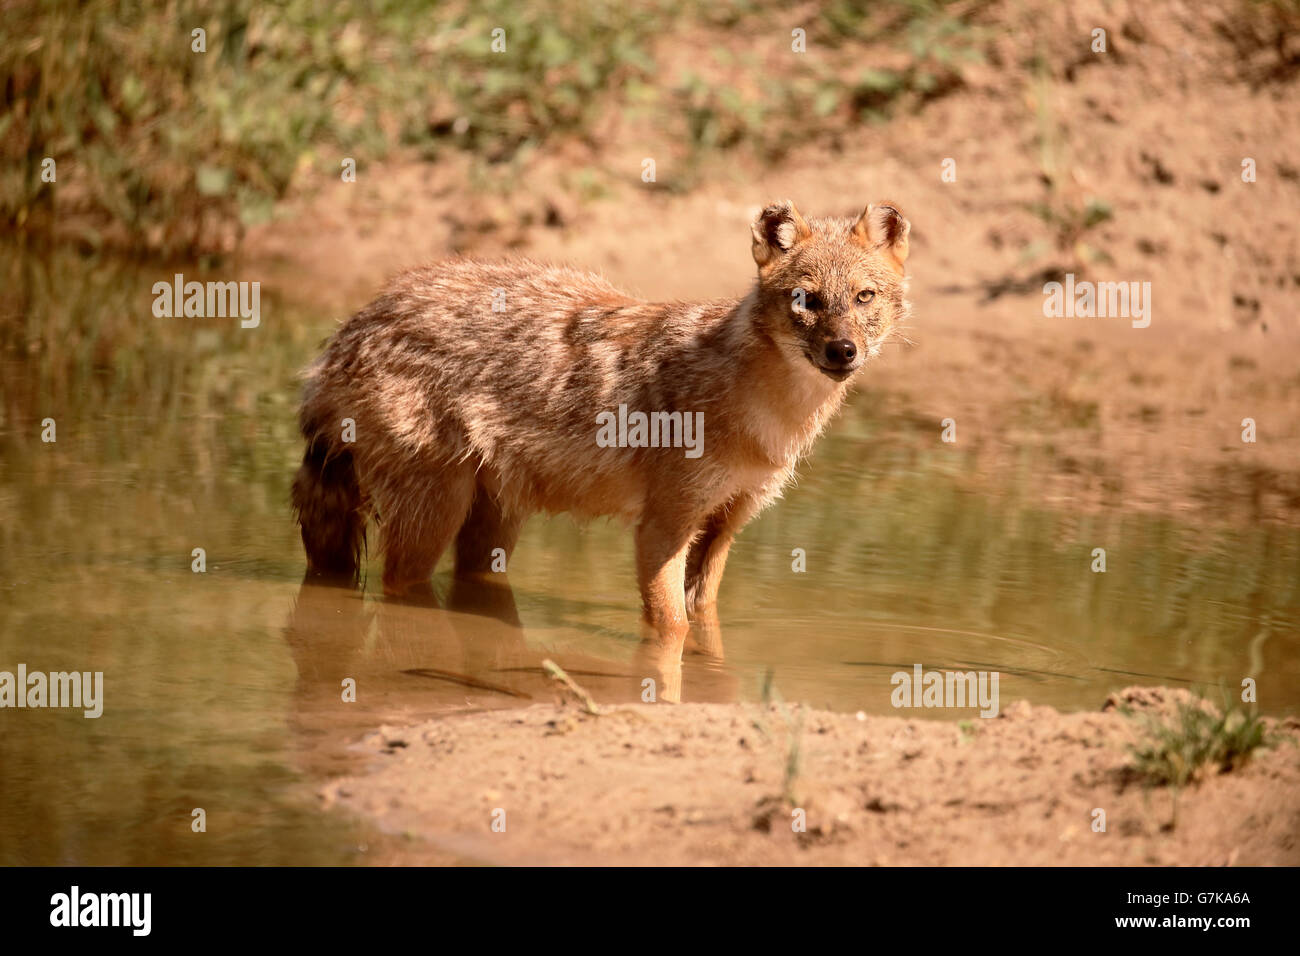 European jackal, Canis aureus moreoticus, Single mammal in water, Romania, June 2016 Stock Photo